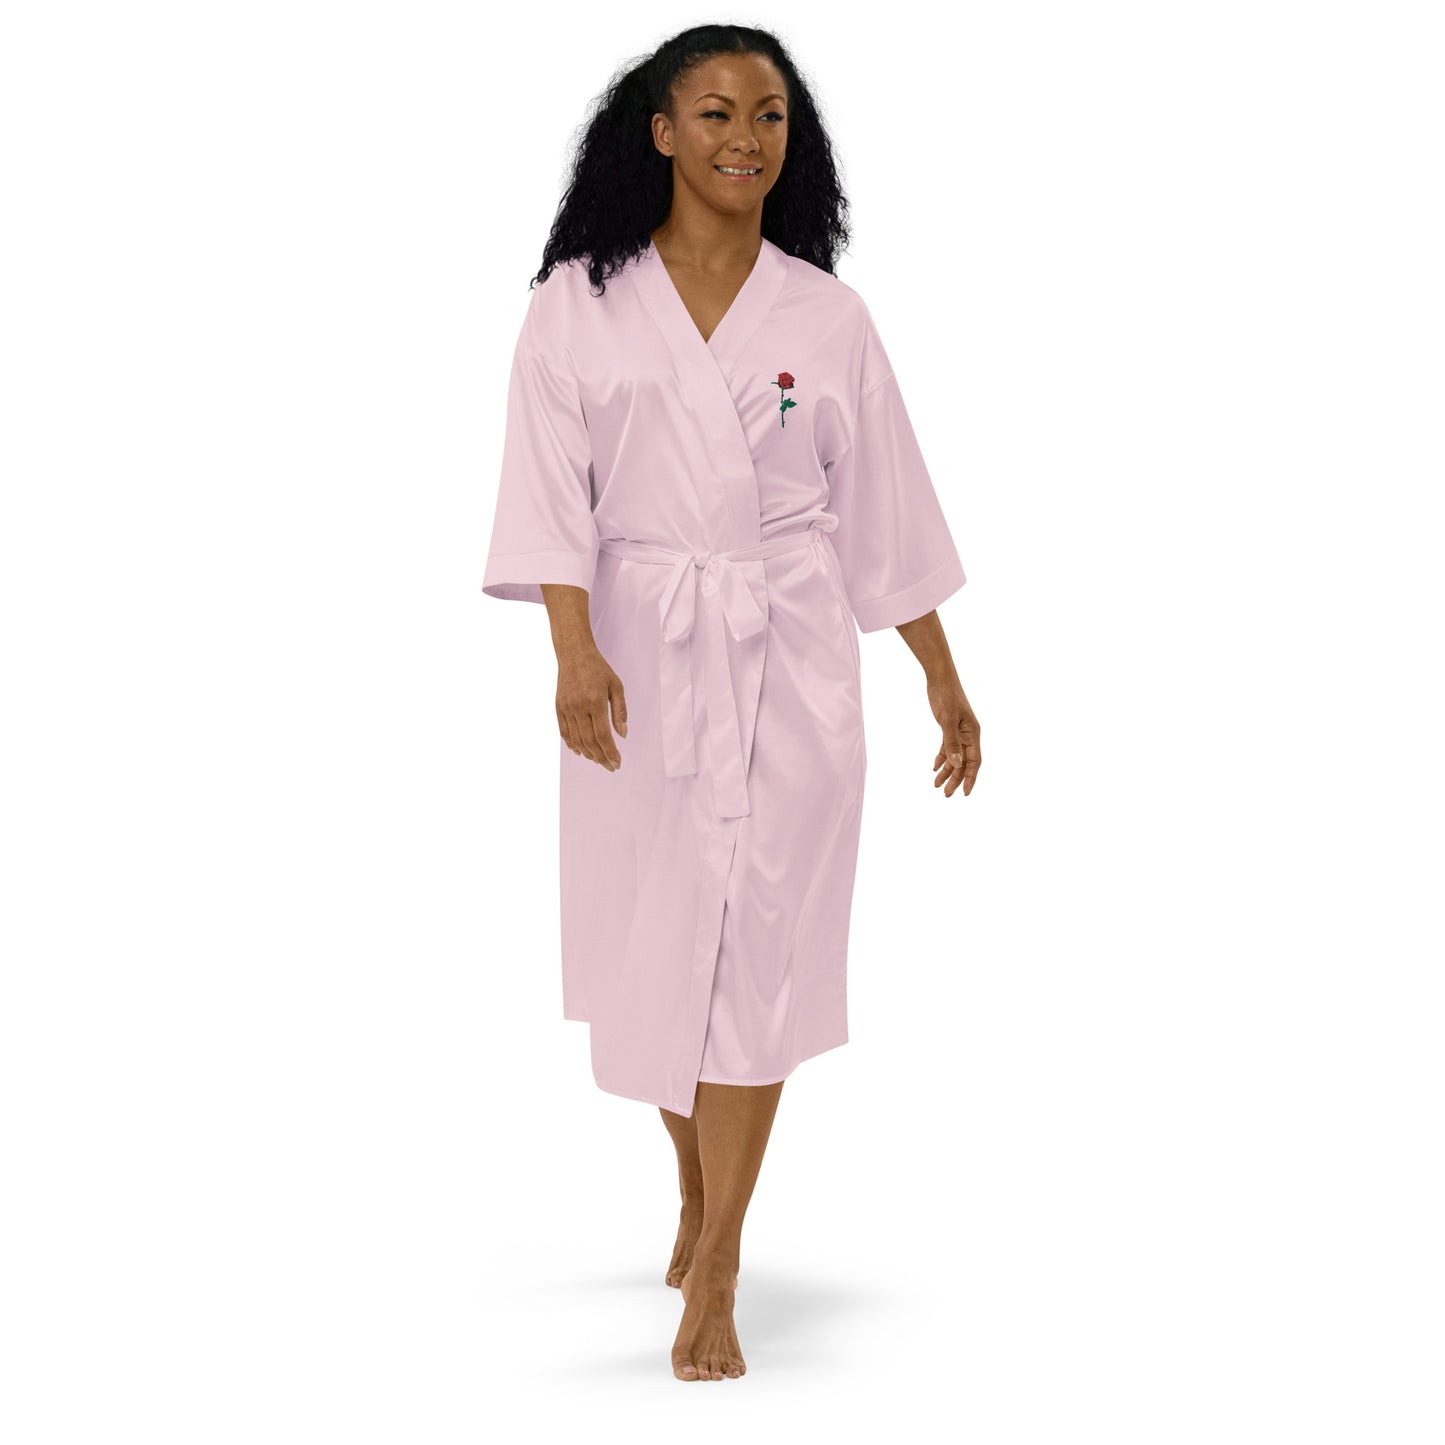 Adonis-Creations Women's Satin robe